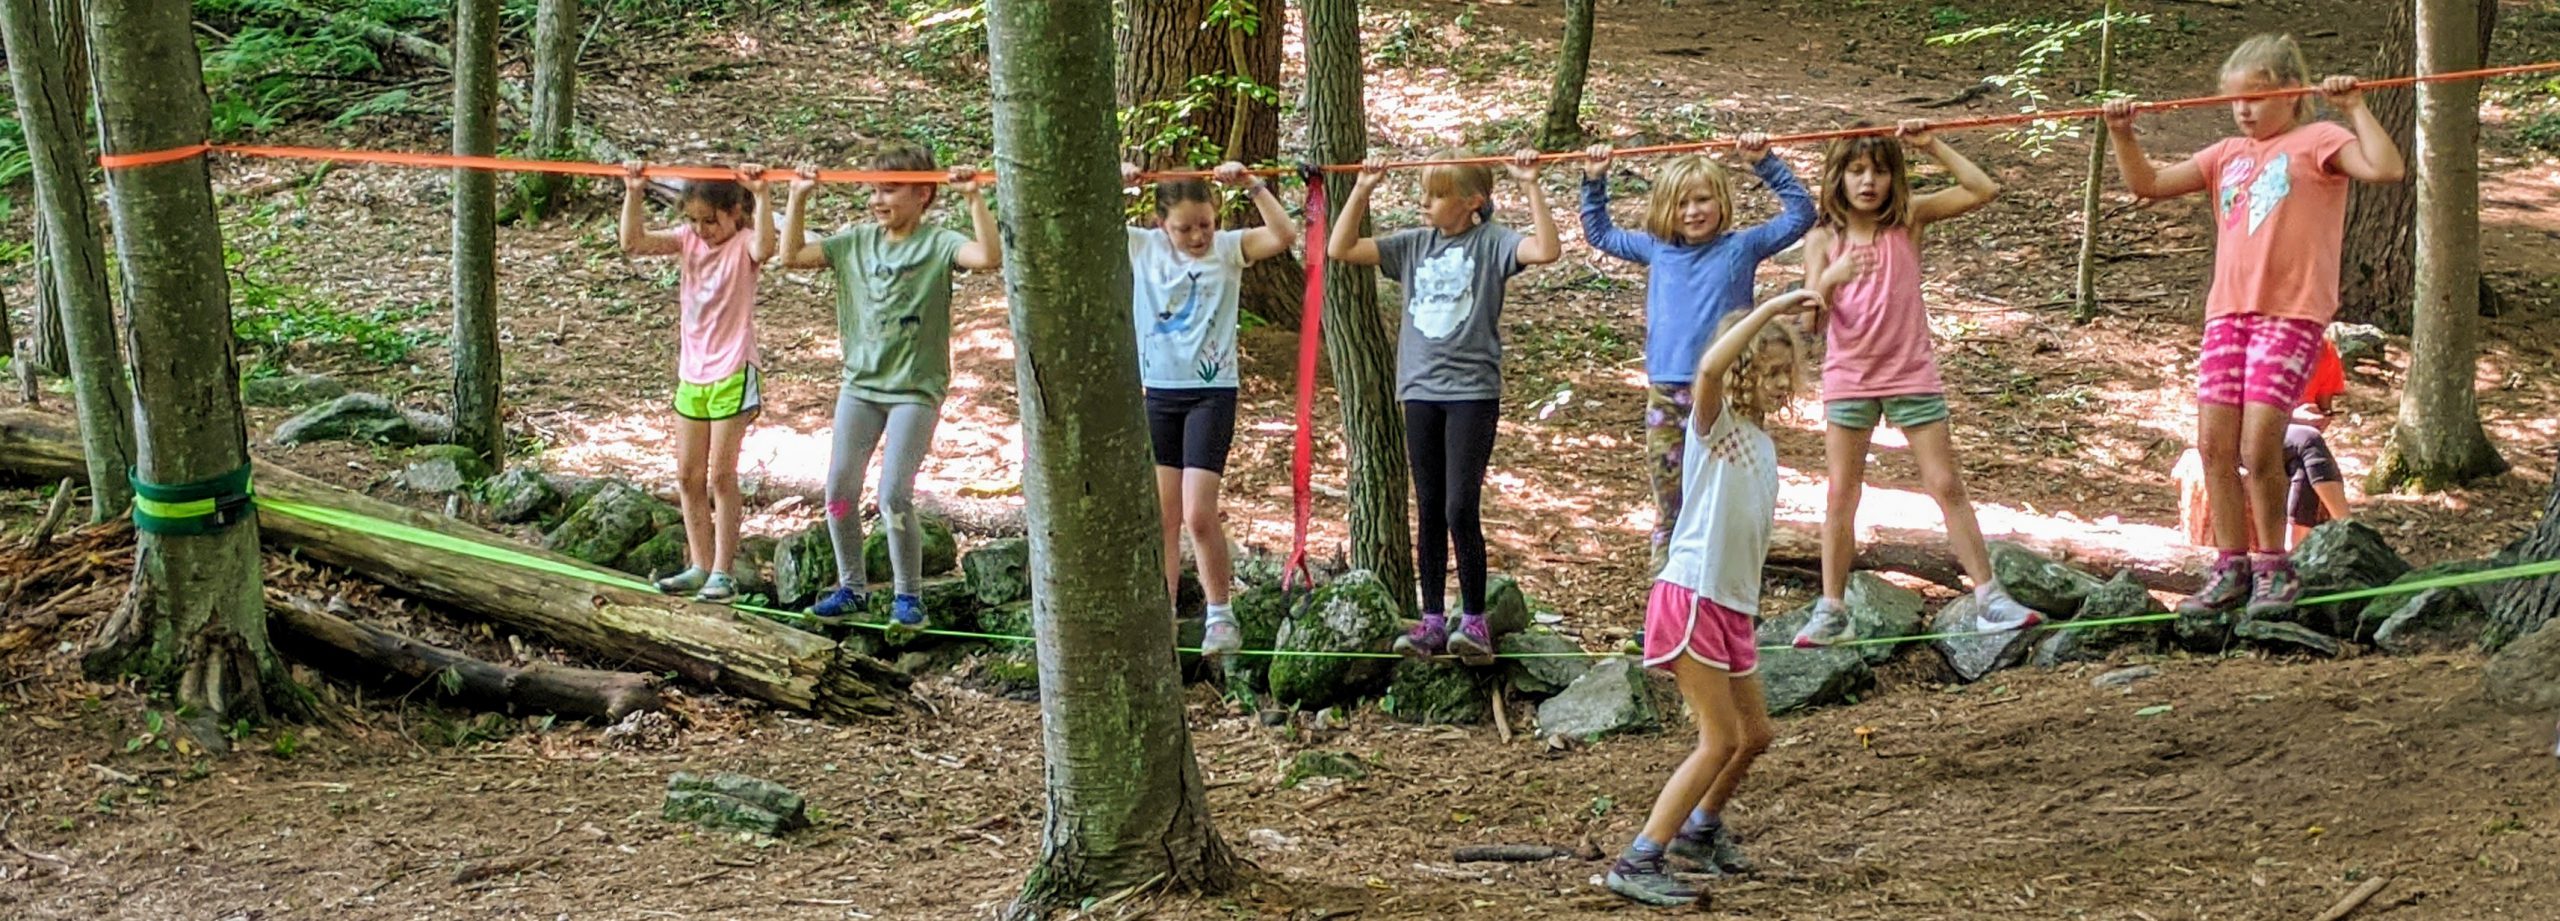 TimberNook – An all inclusive outdoor program